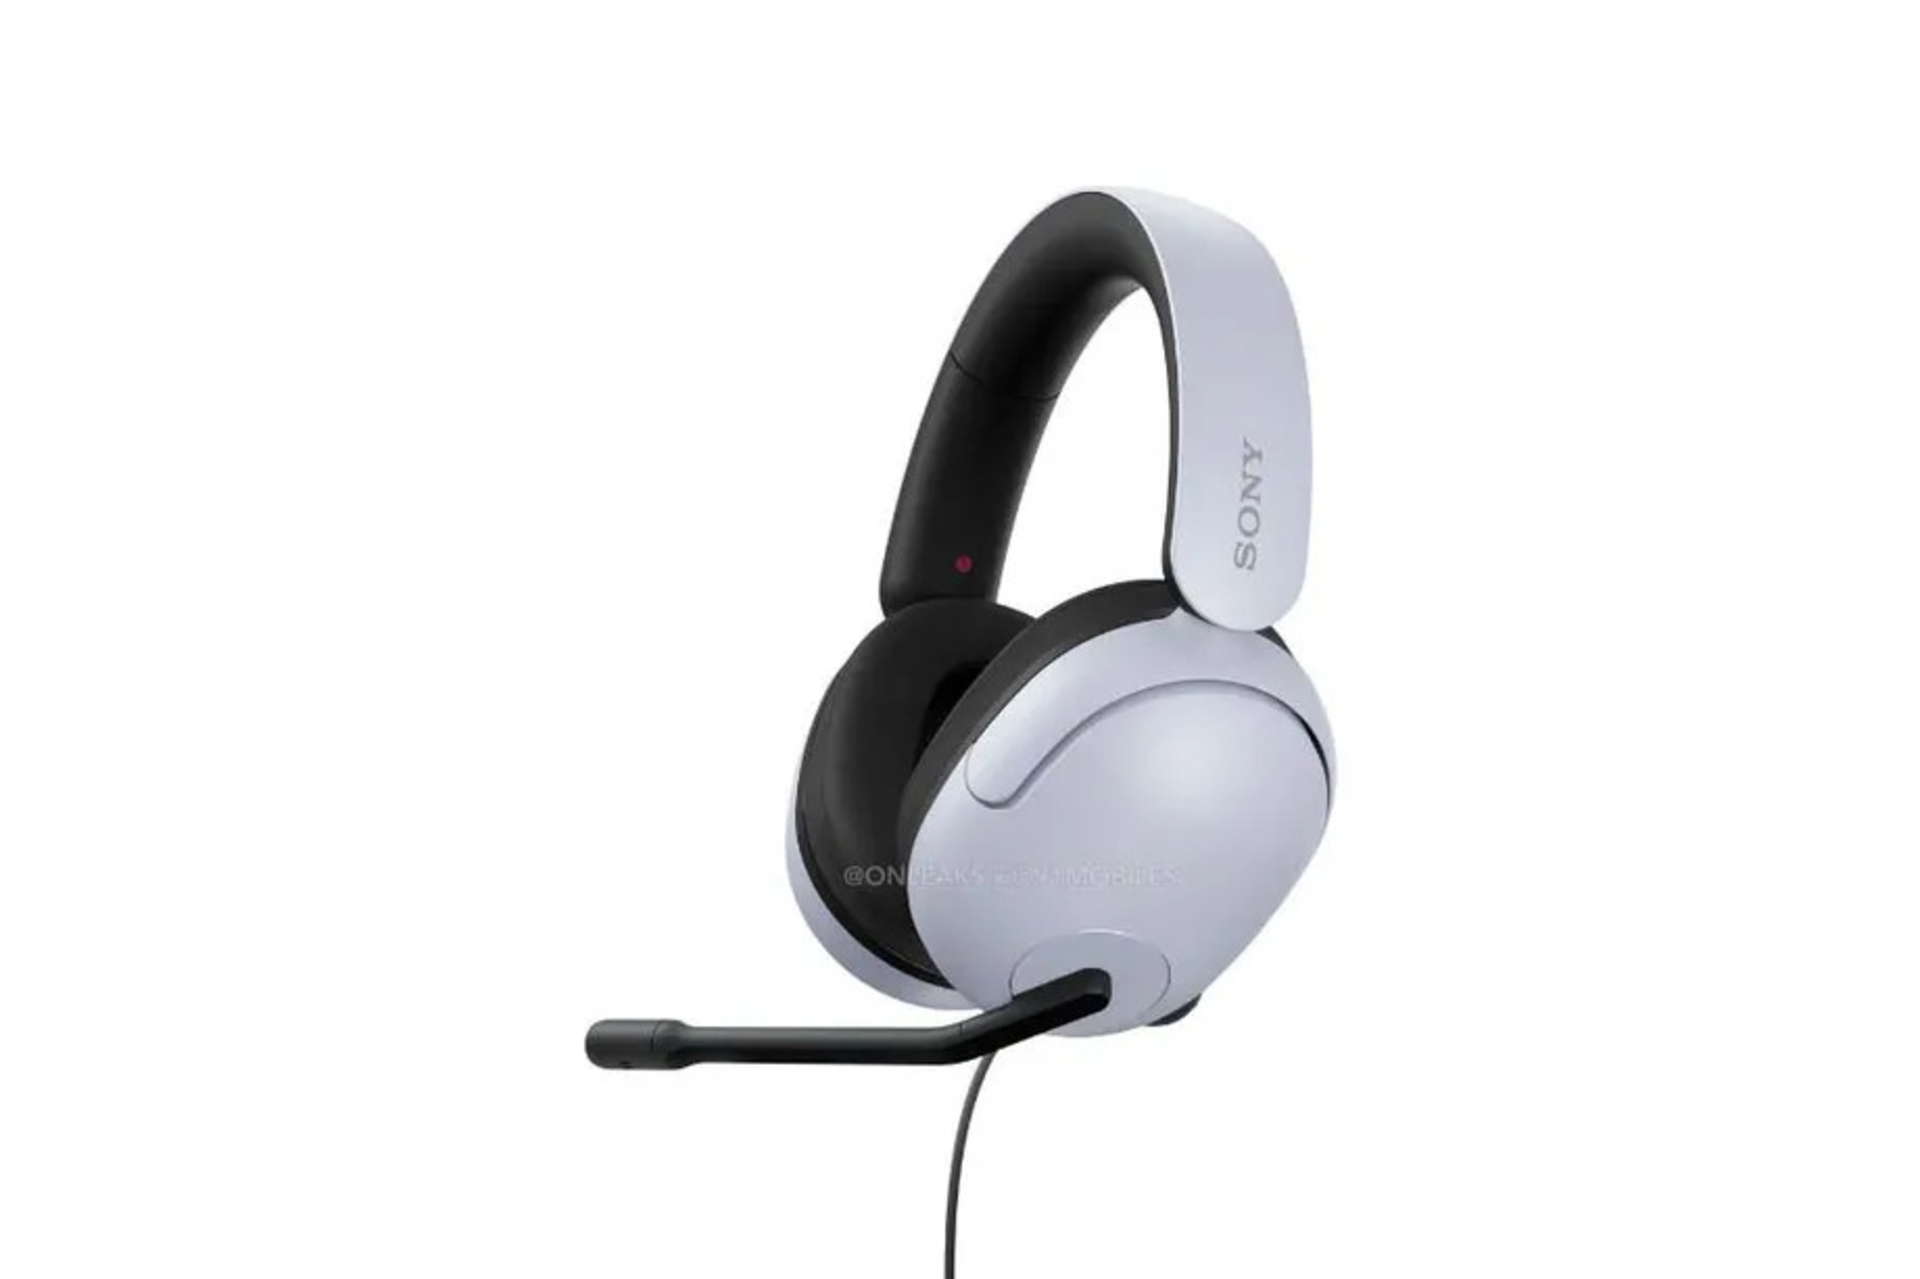 Sony Inzone H3 produkt shot. Wite bedrade headset op wite eftergrûn